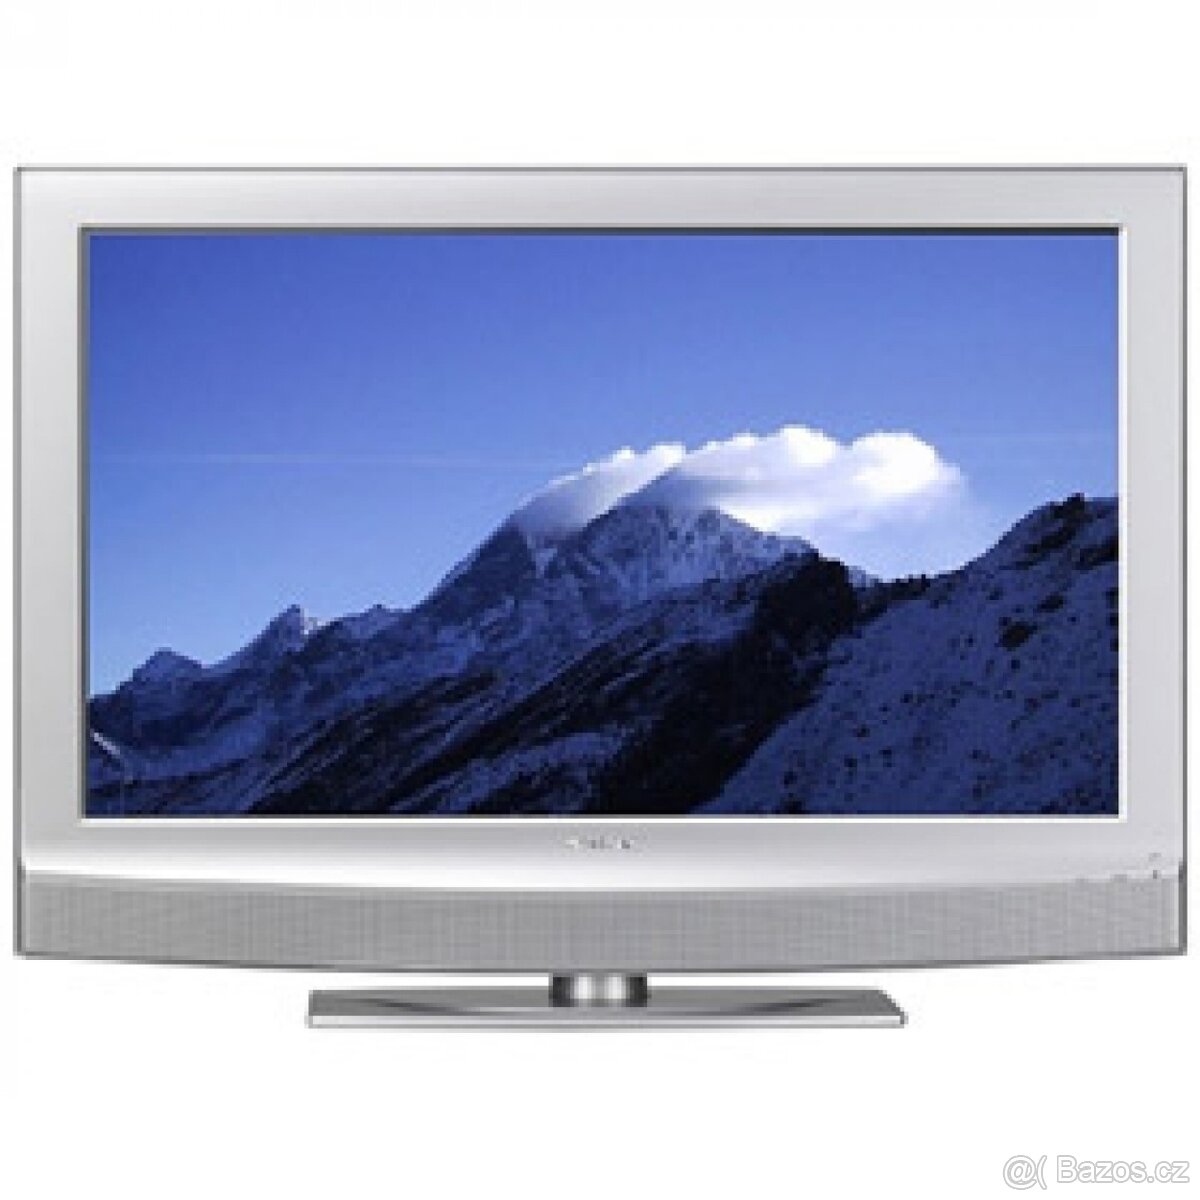 Sony Bravia KDL-32U2000 + DVB-T2 setobox